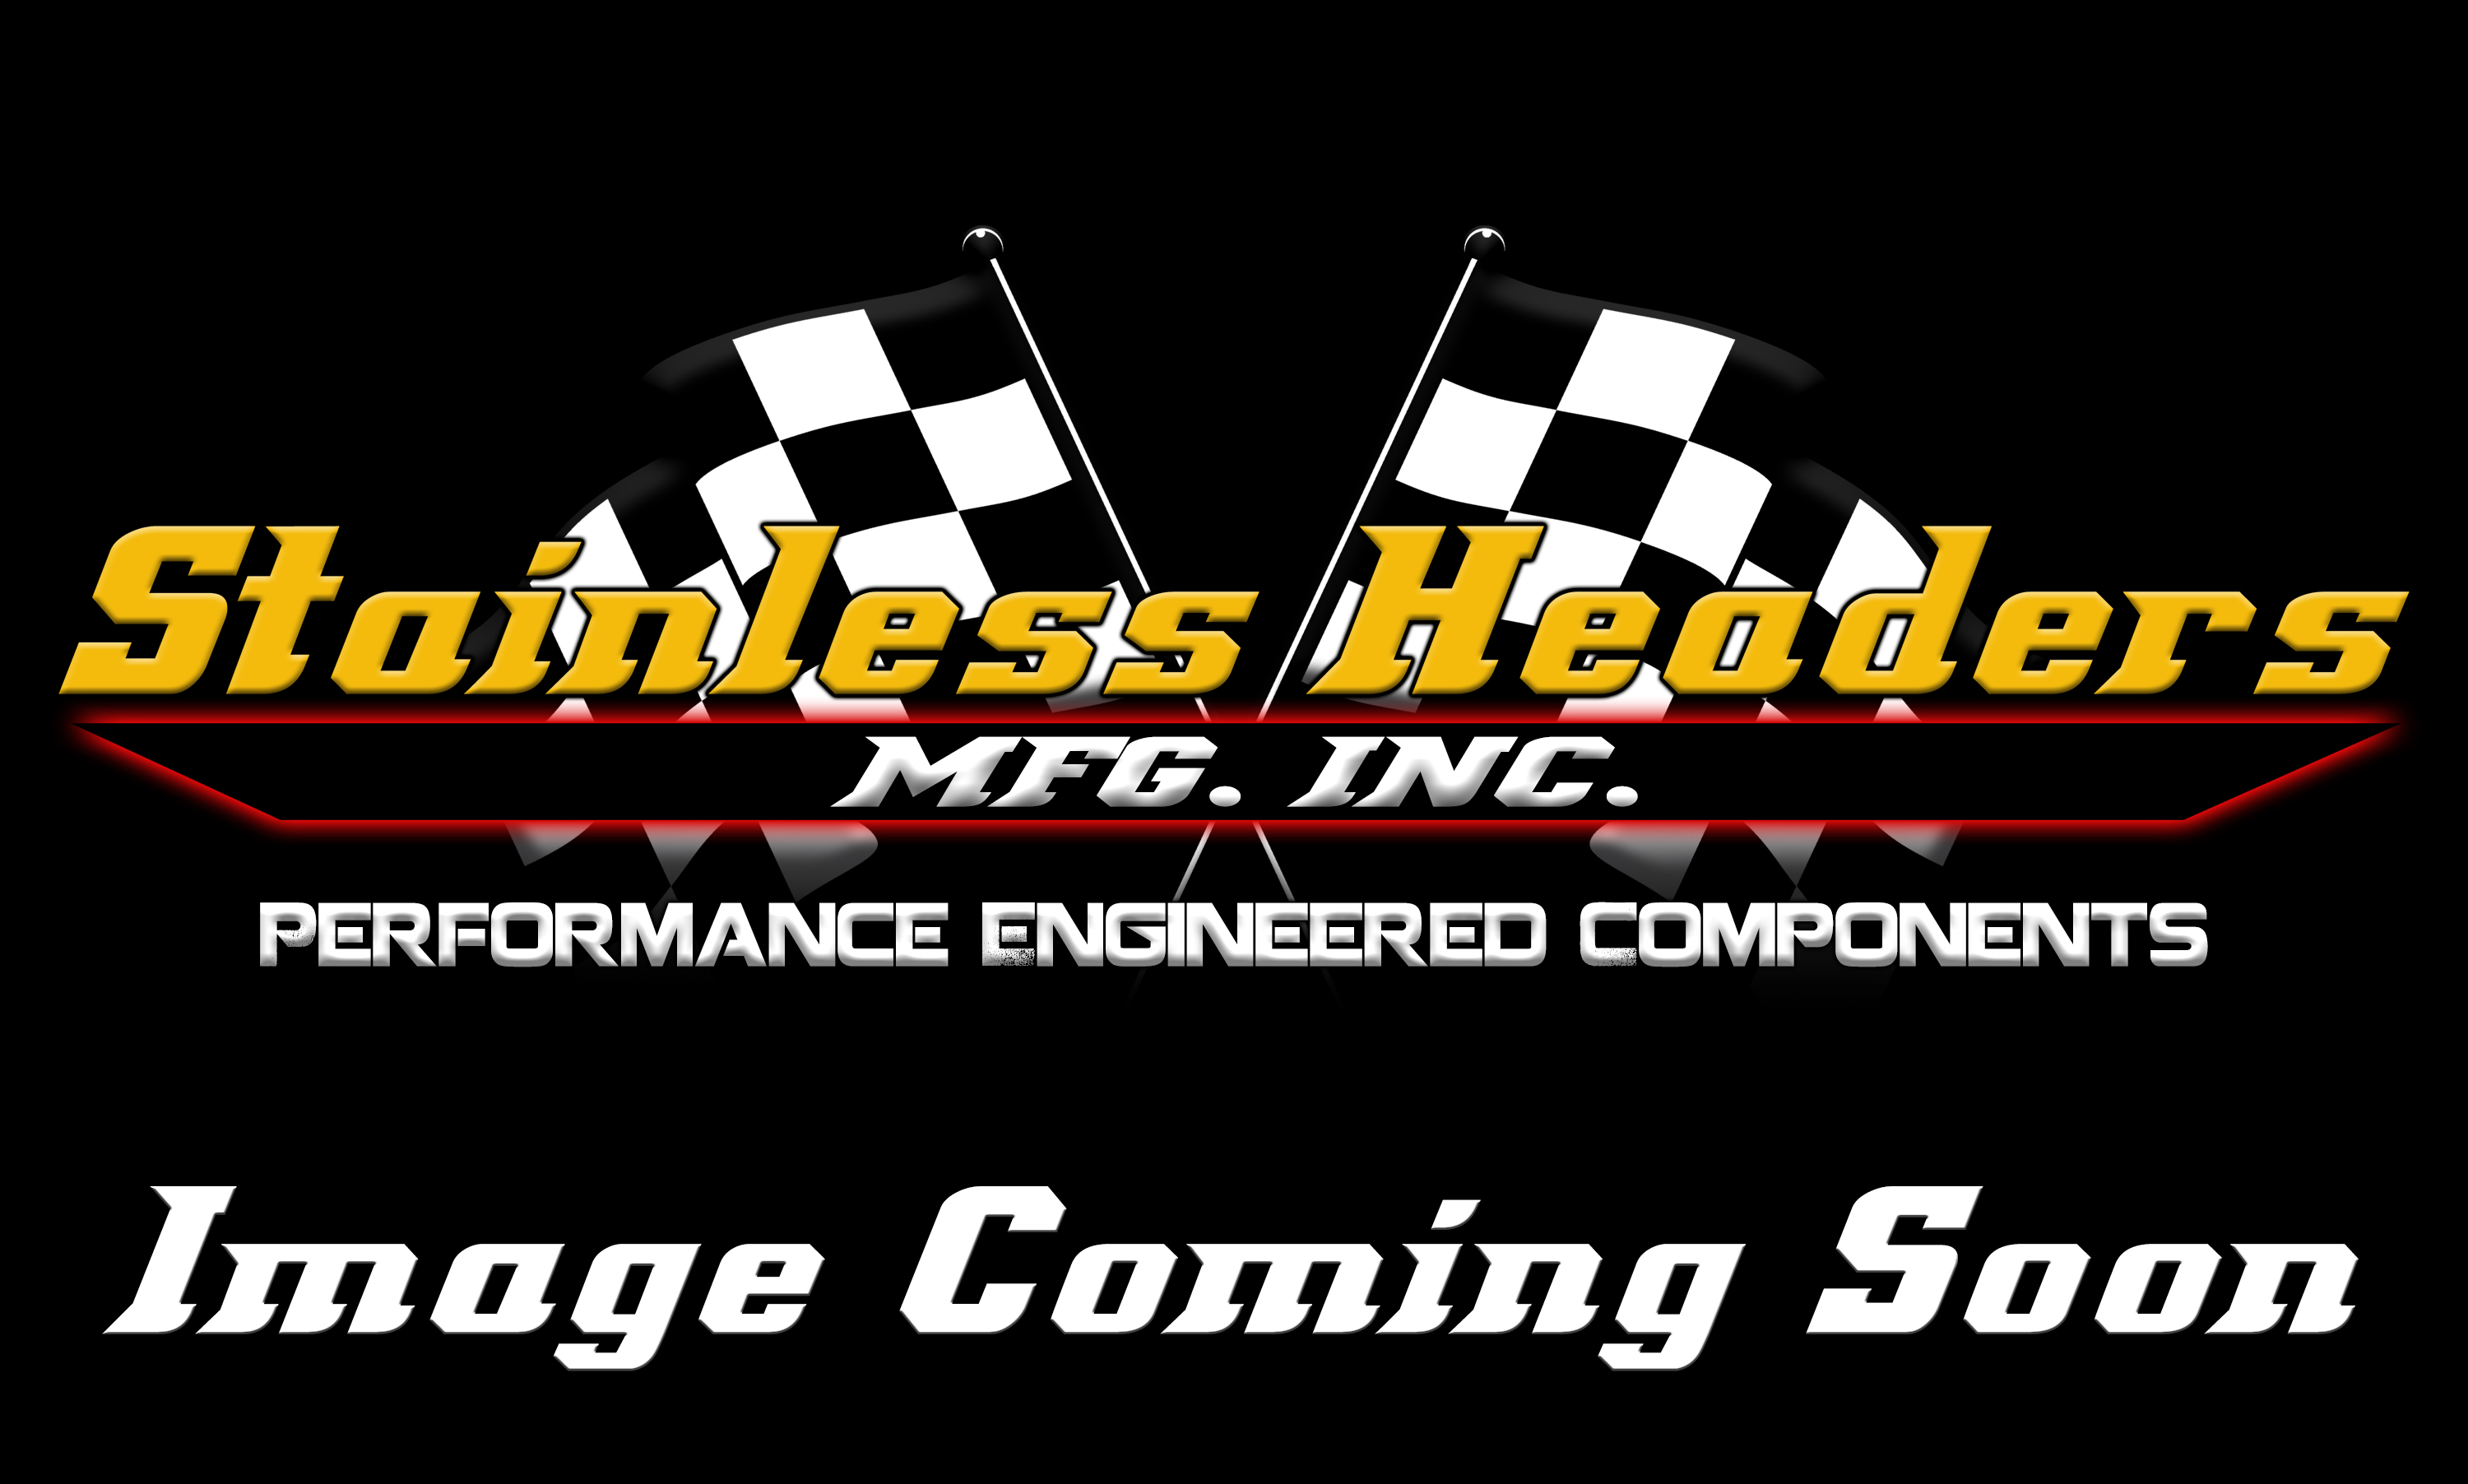 Stainless Headers - Chevrolet MBR 526 Hemi Head Mild Steel Header Flange